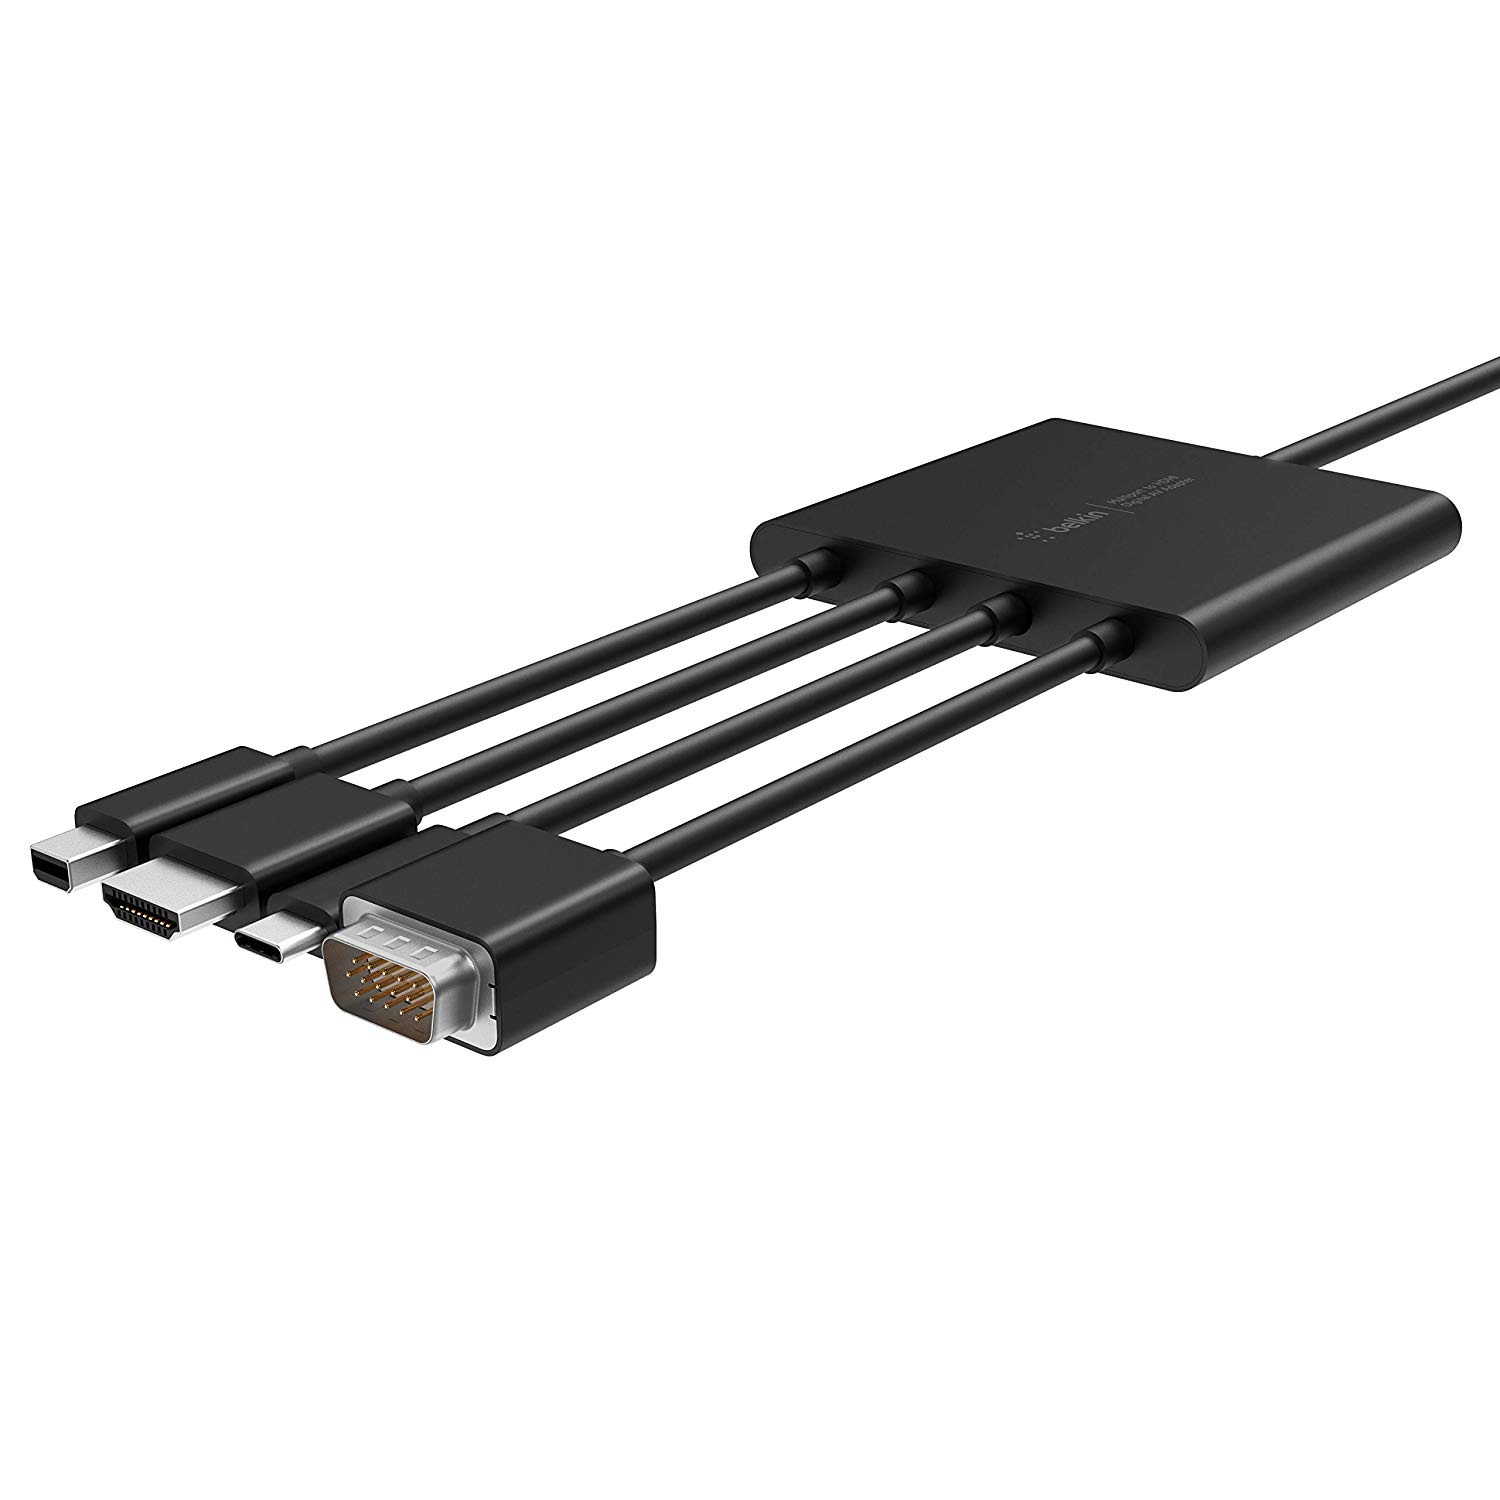 Belkin、4K Ultra HD対応で4つの出力コネクタが付属した｢Multiport to HDMI Digital AV アダプタ (VGA, USB-C, HDMI, Mini DisplayPort)｣を8月23日に発売へ